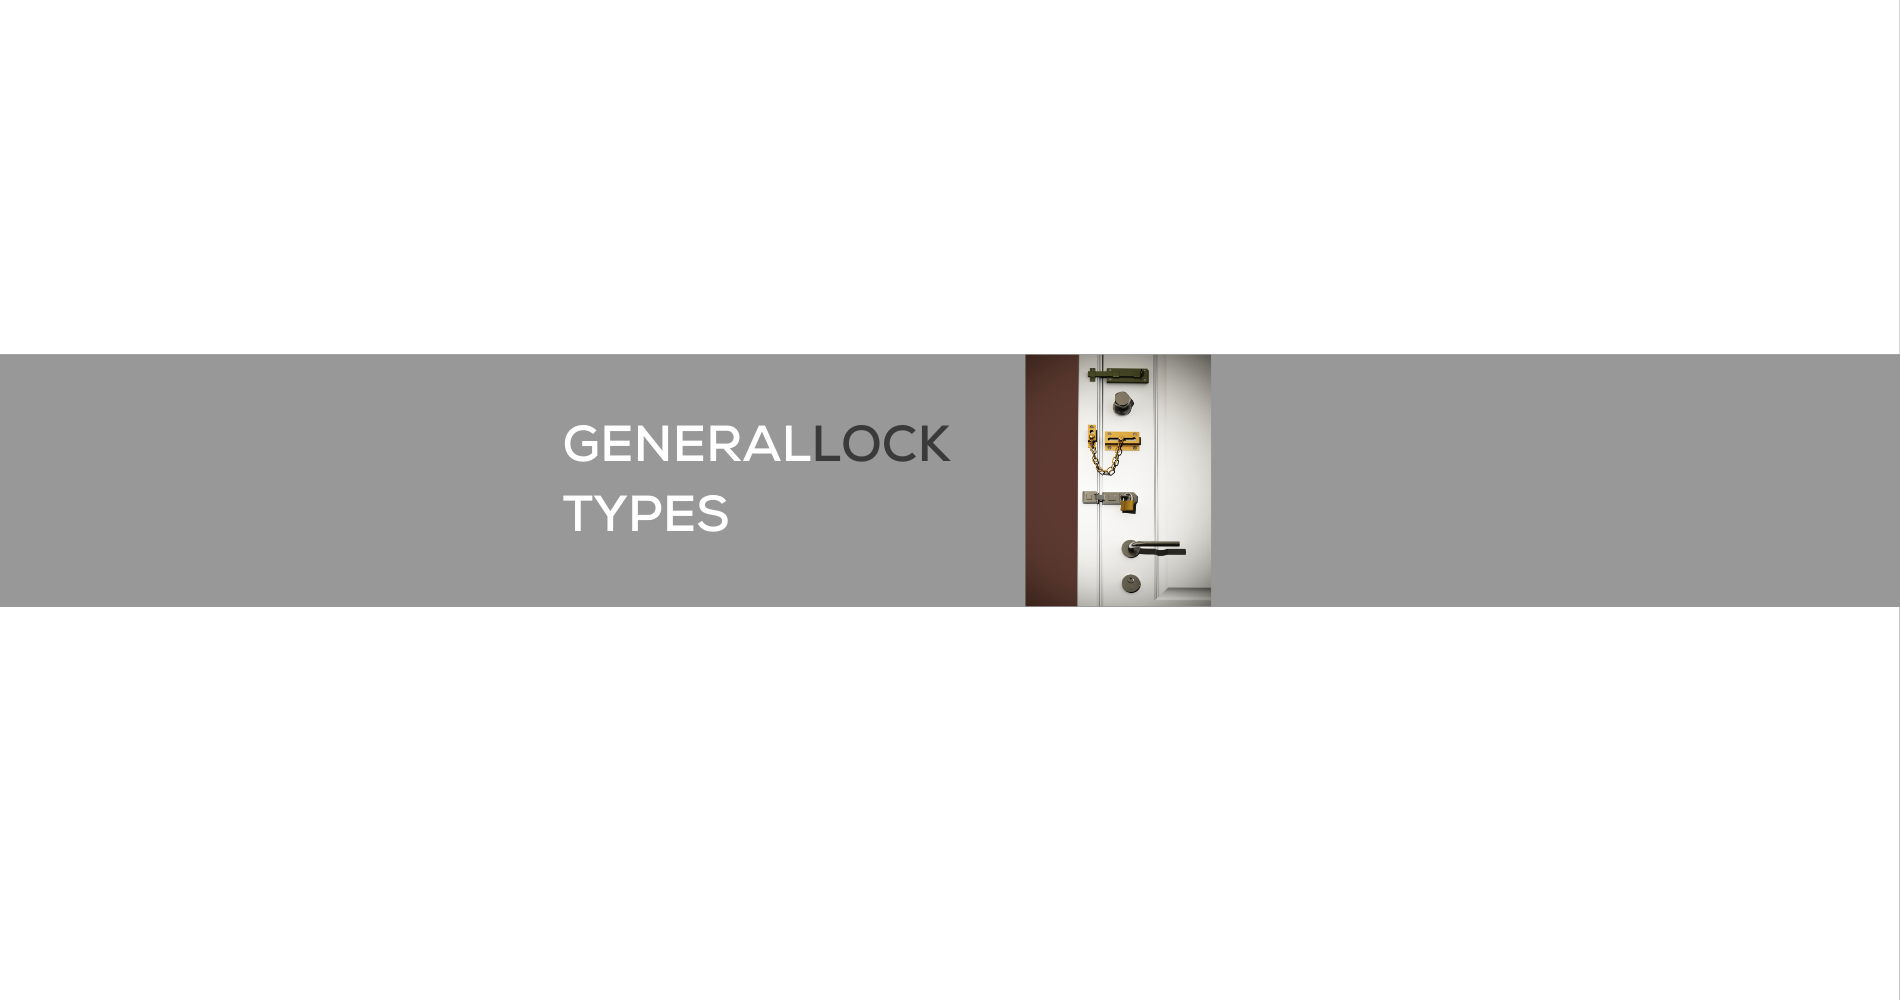 GENERAL LOCK TYPES